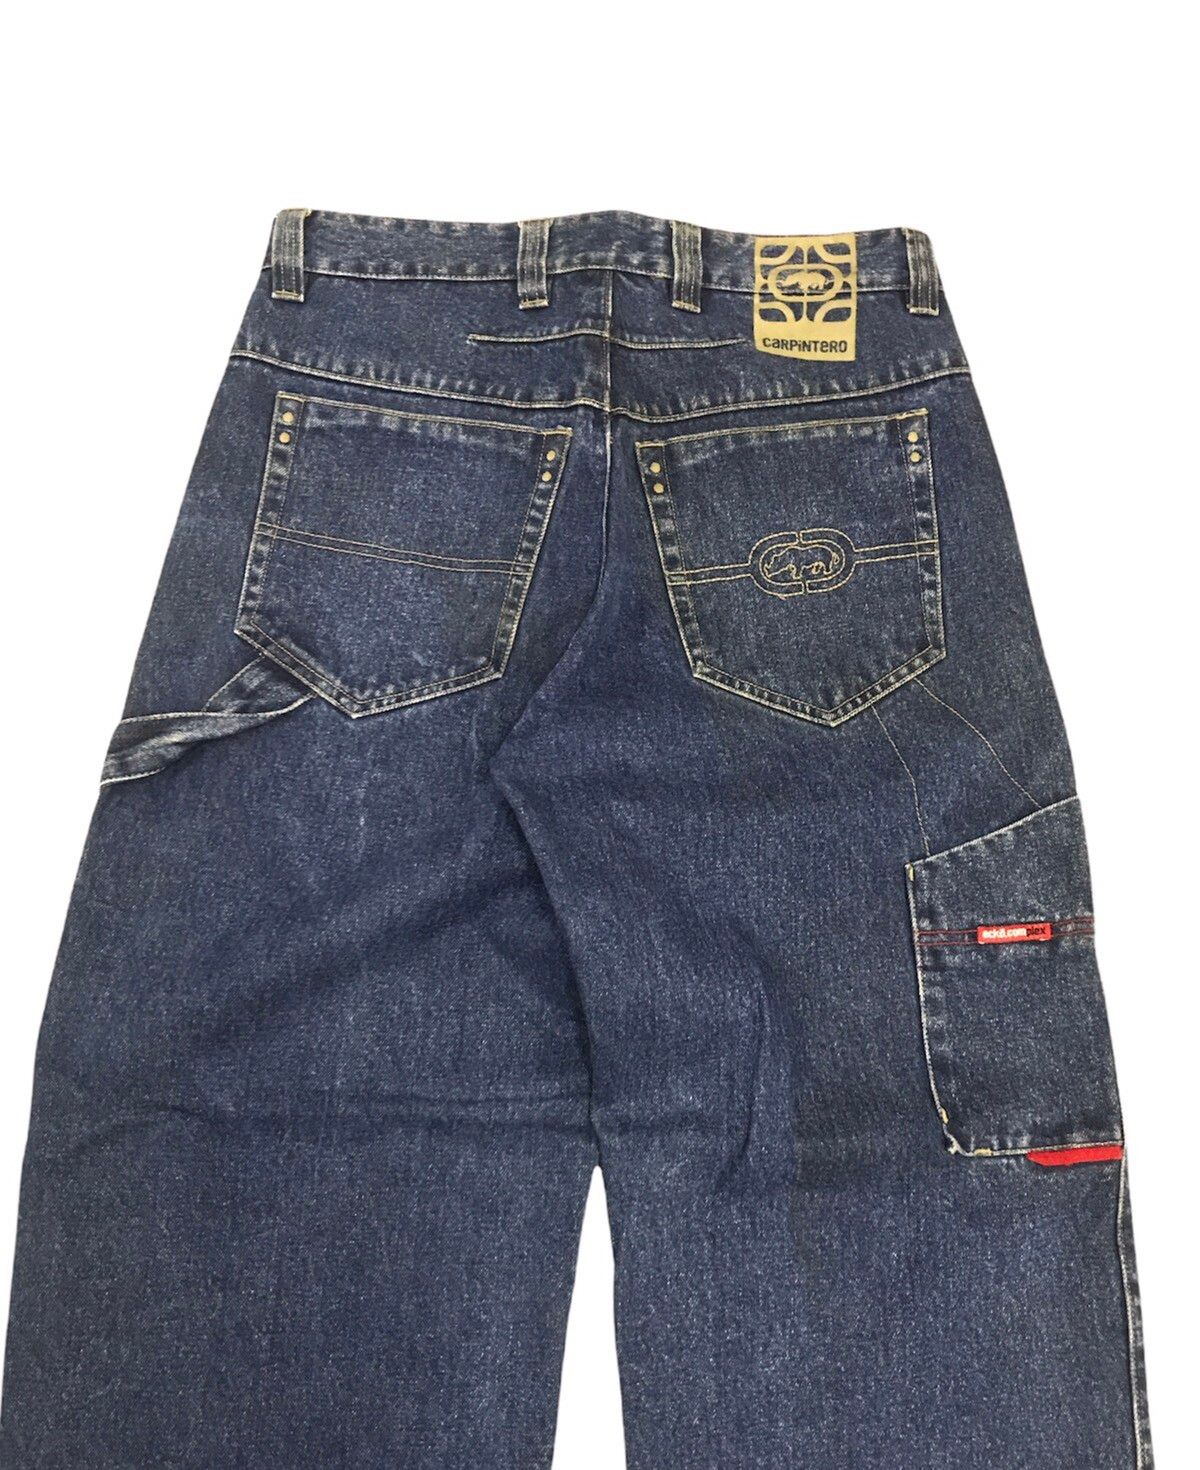 Ecko Unltd. Vintage Ecko Unltd Carpenter Jeans | Grailed